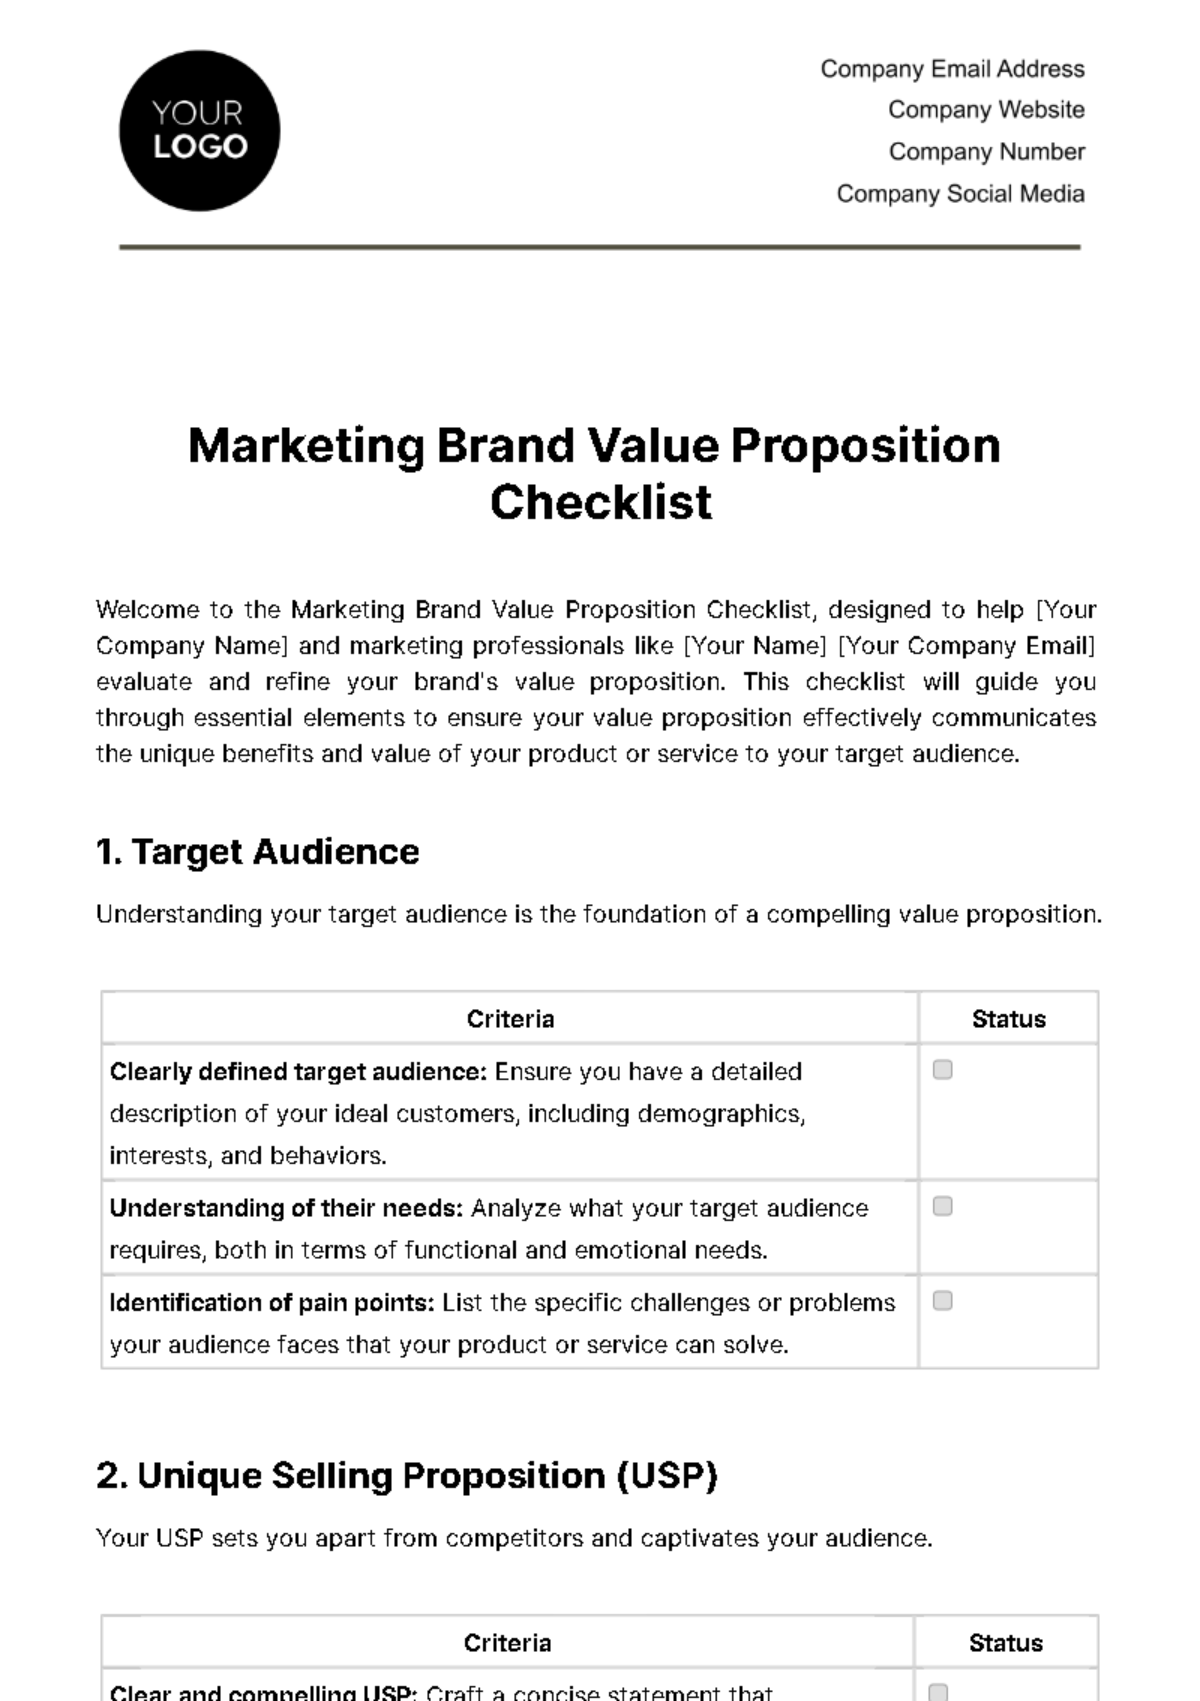 Free Marketing Brand Value Proposition Checklist Template